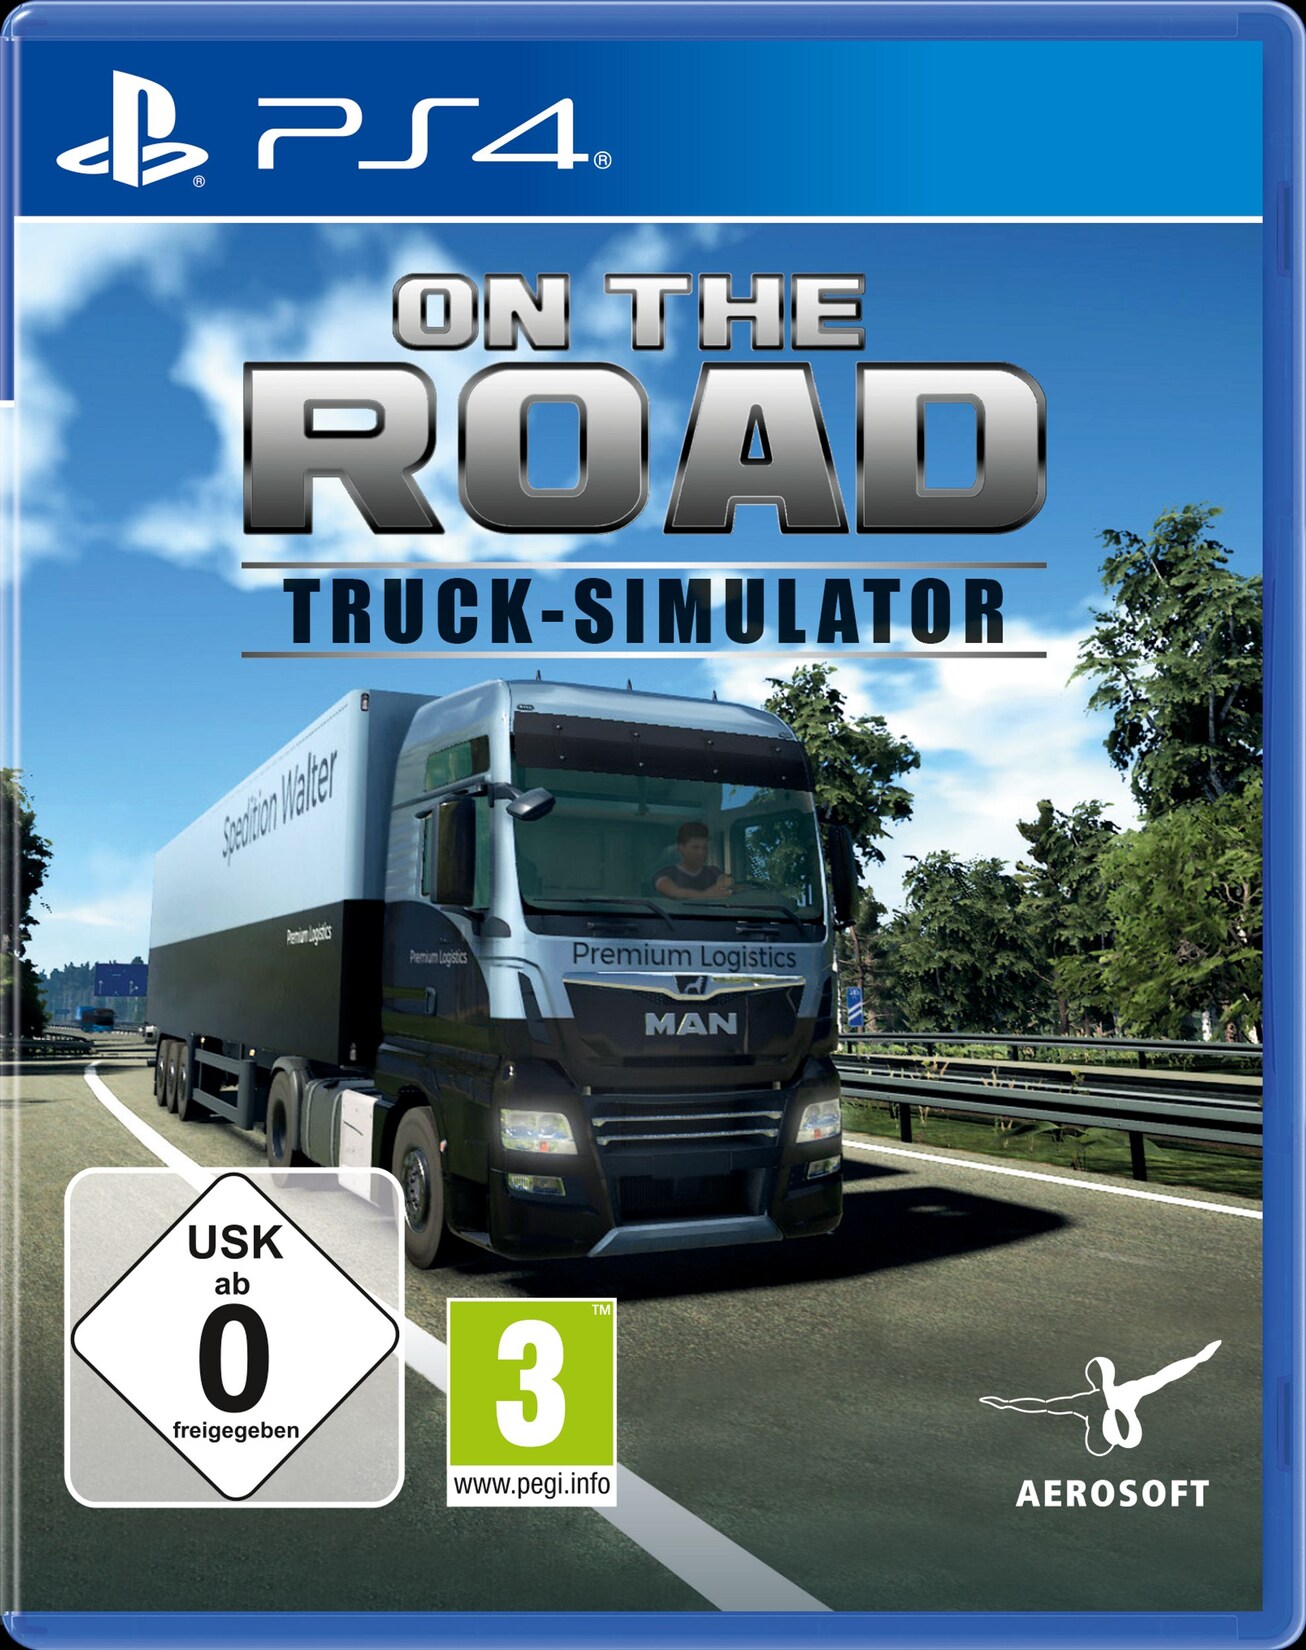 Truck Simulator - On the Road Truck/LKW - Simulator